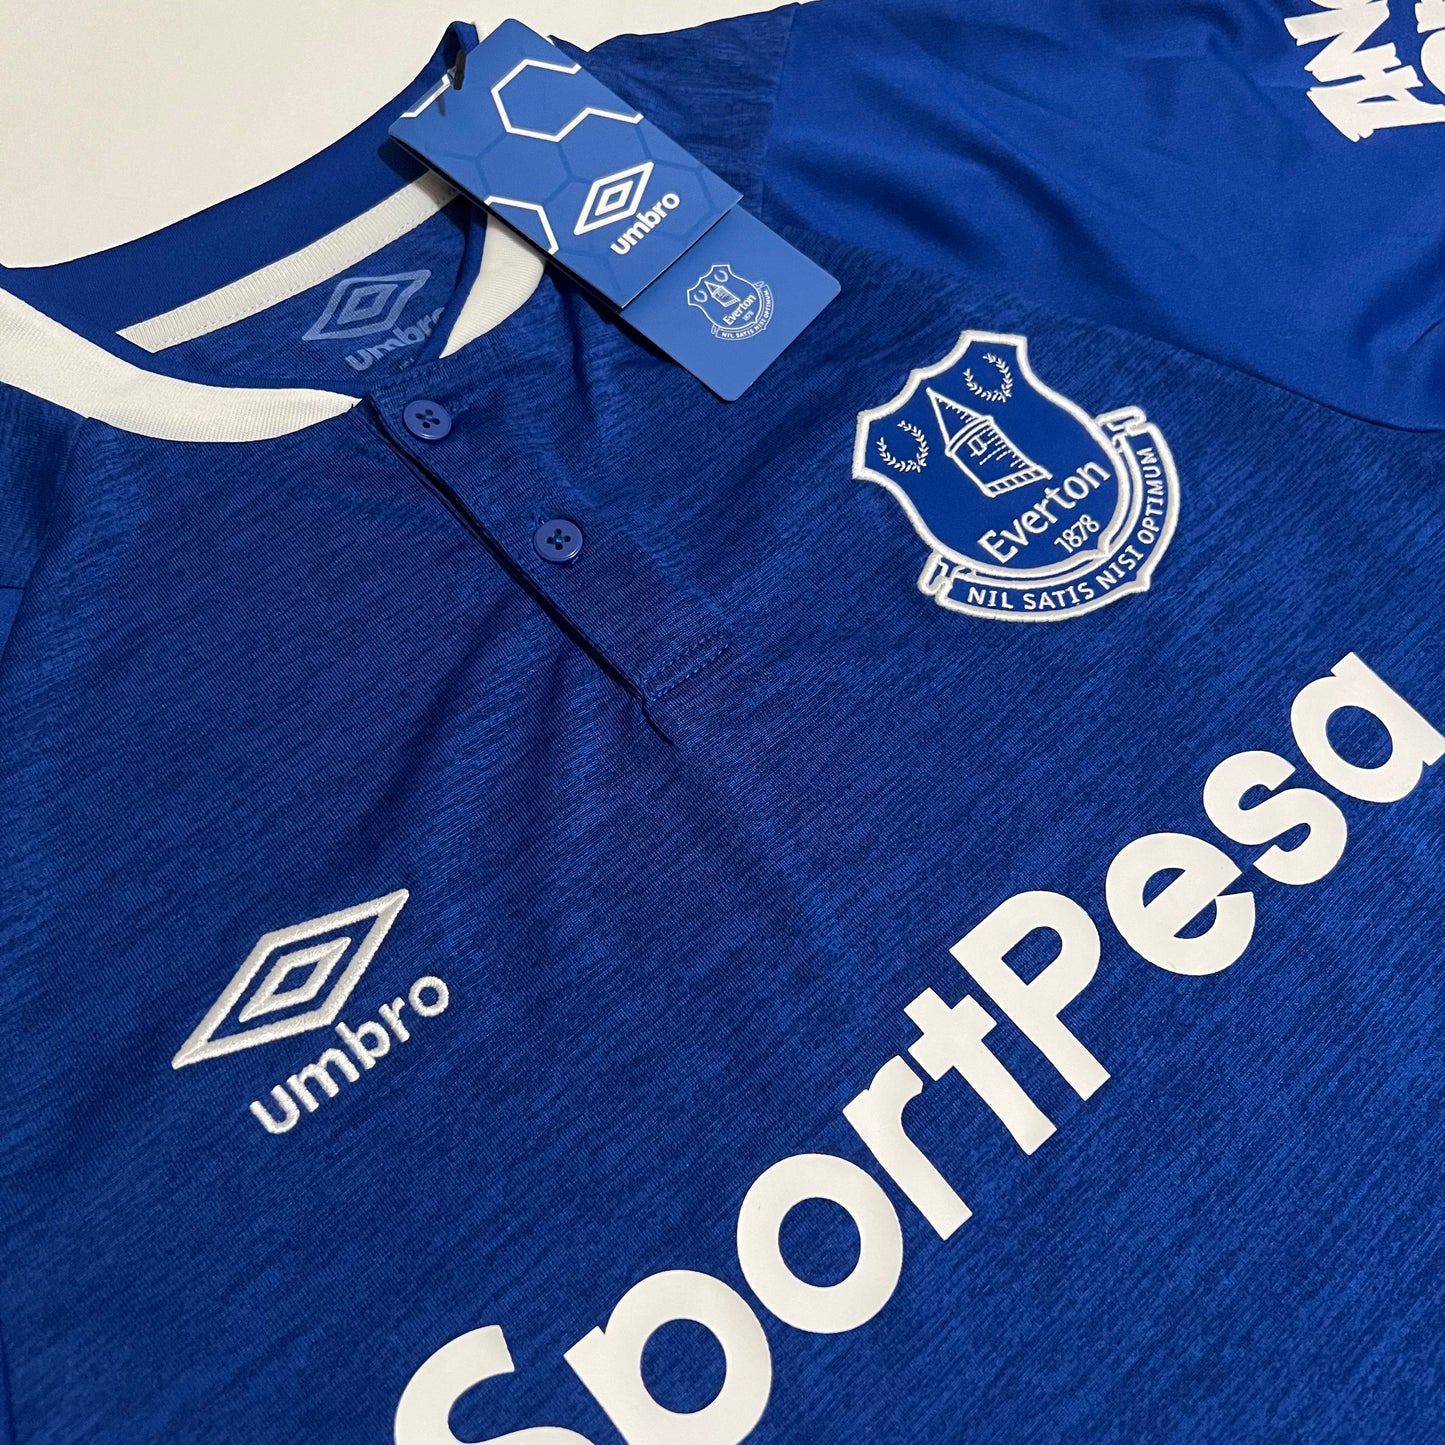 2018/19 Everton Umbro Home Jersey - S